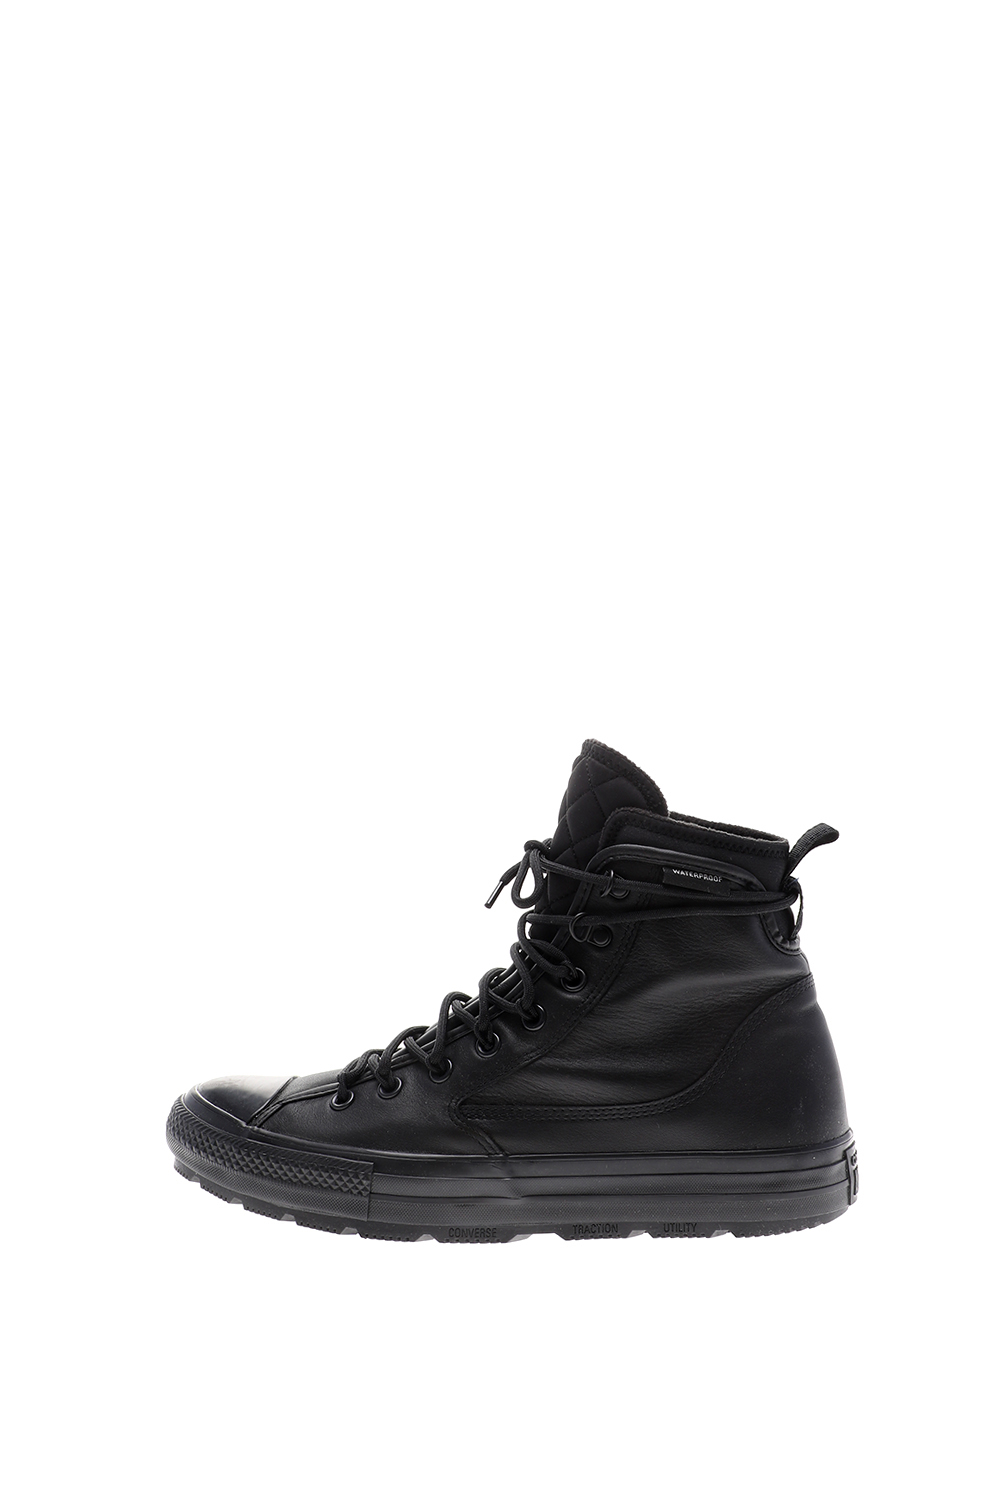 CONVERSE - Unisex sneakers CONVERSE CTAS All Terrain μαύρα Γυναικεία/Παπούτσια/Sneakers